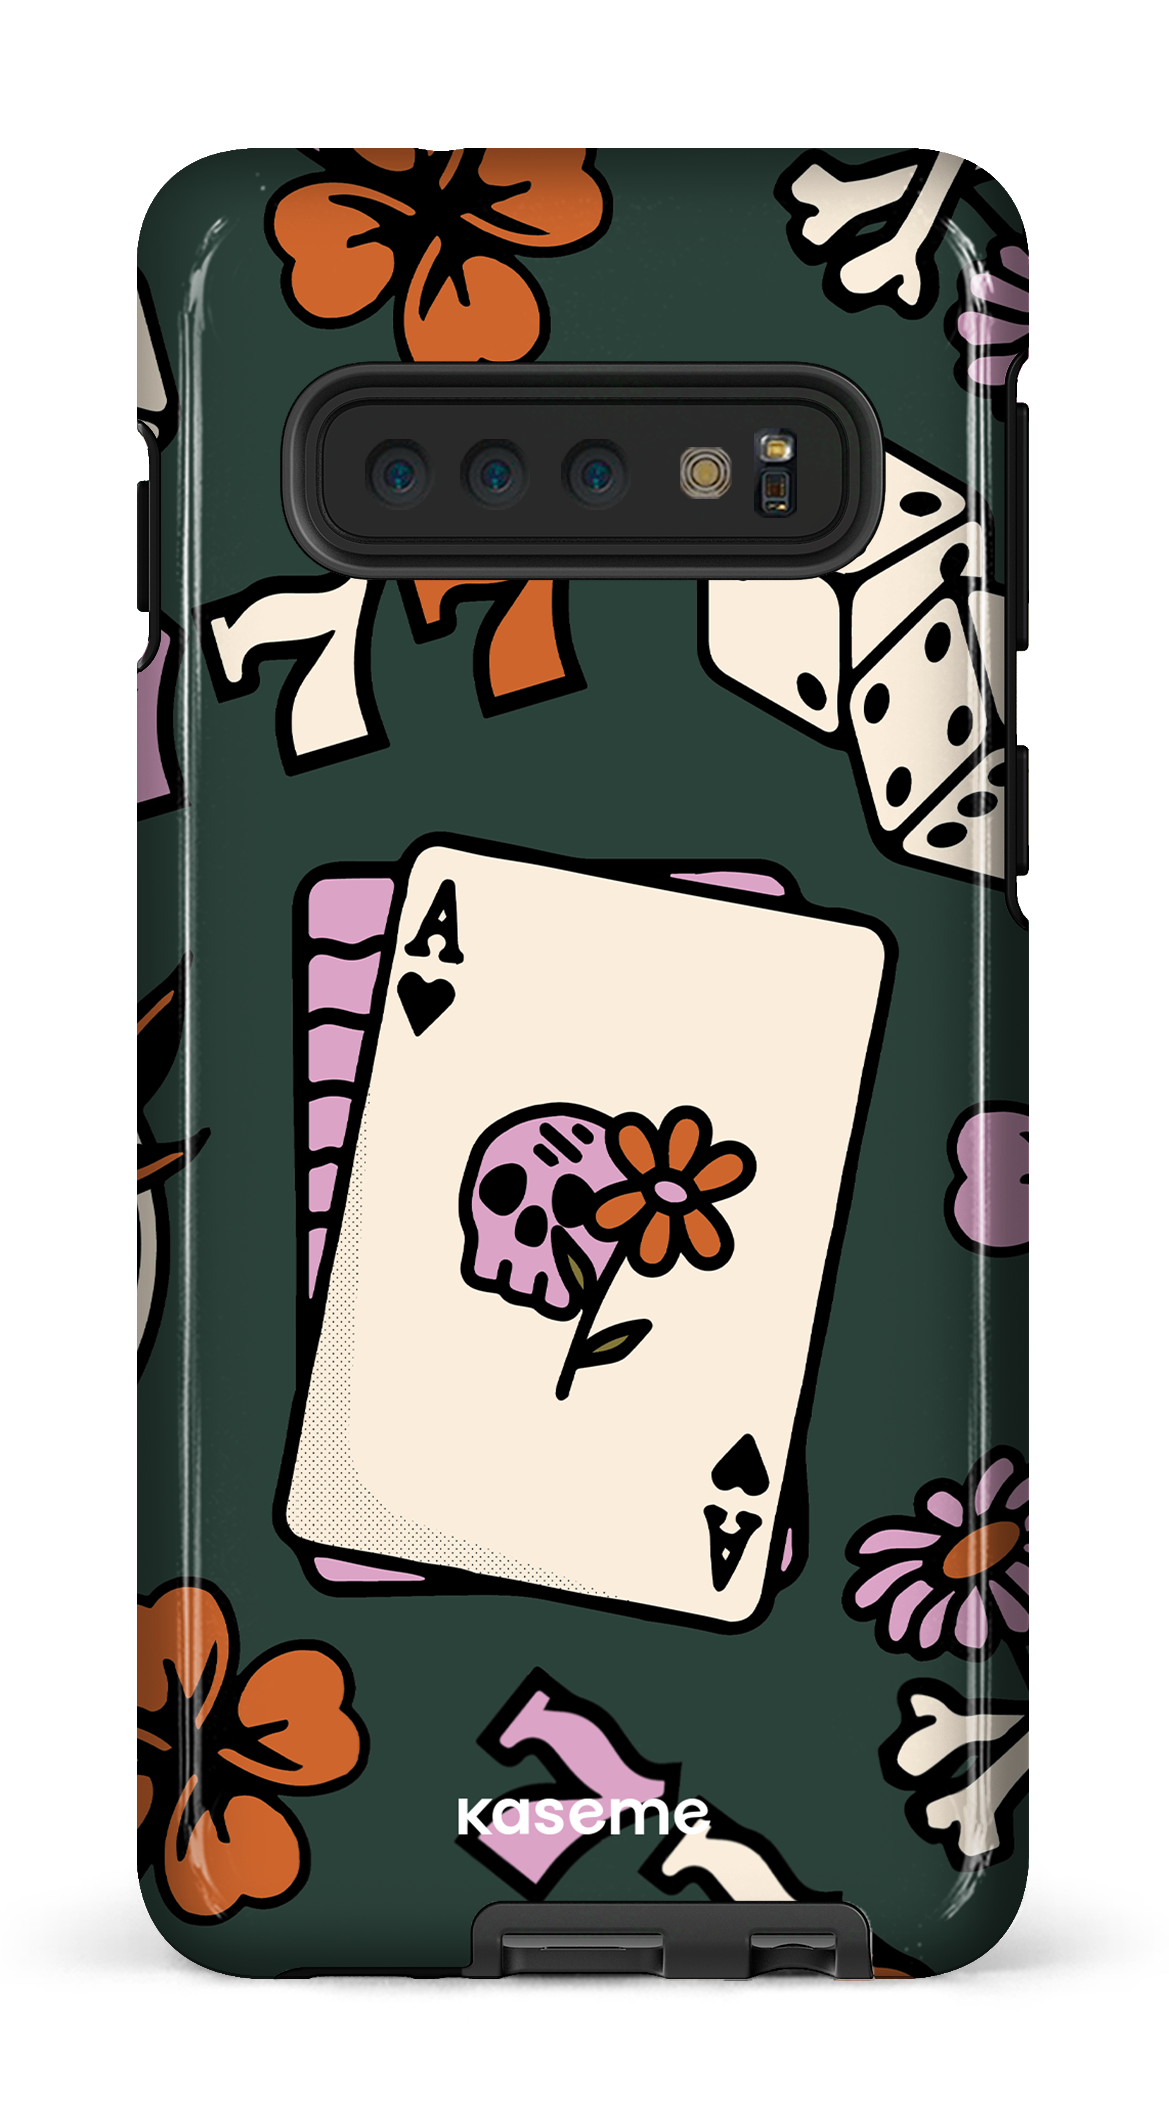 Poker Face - Galaxy S10